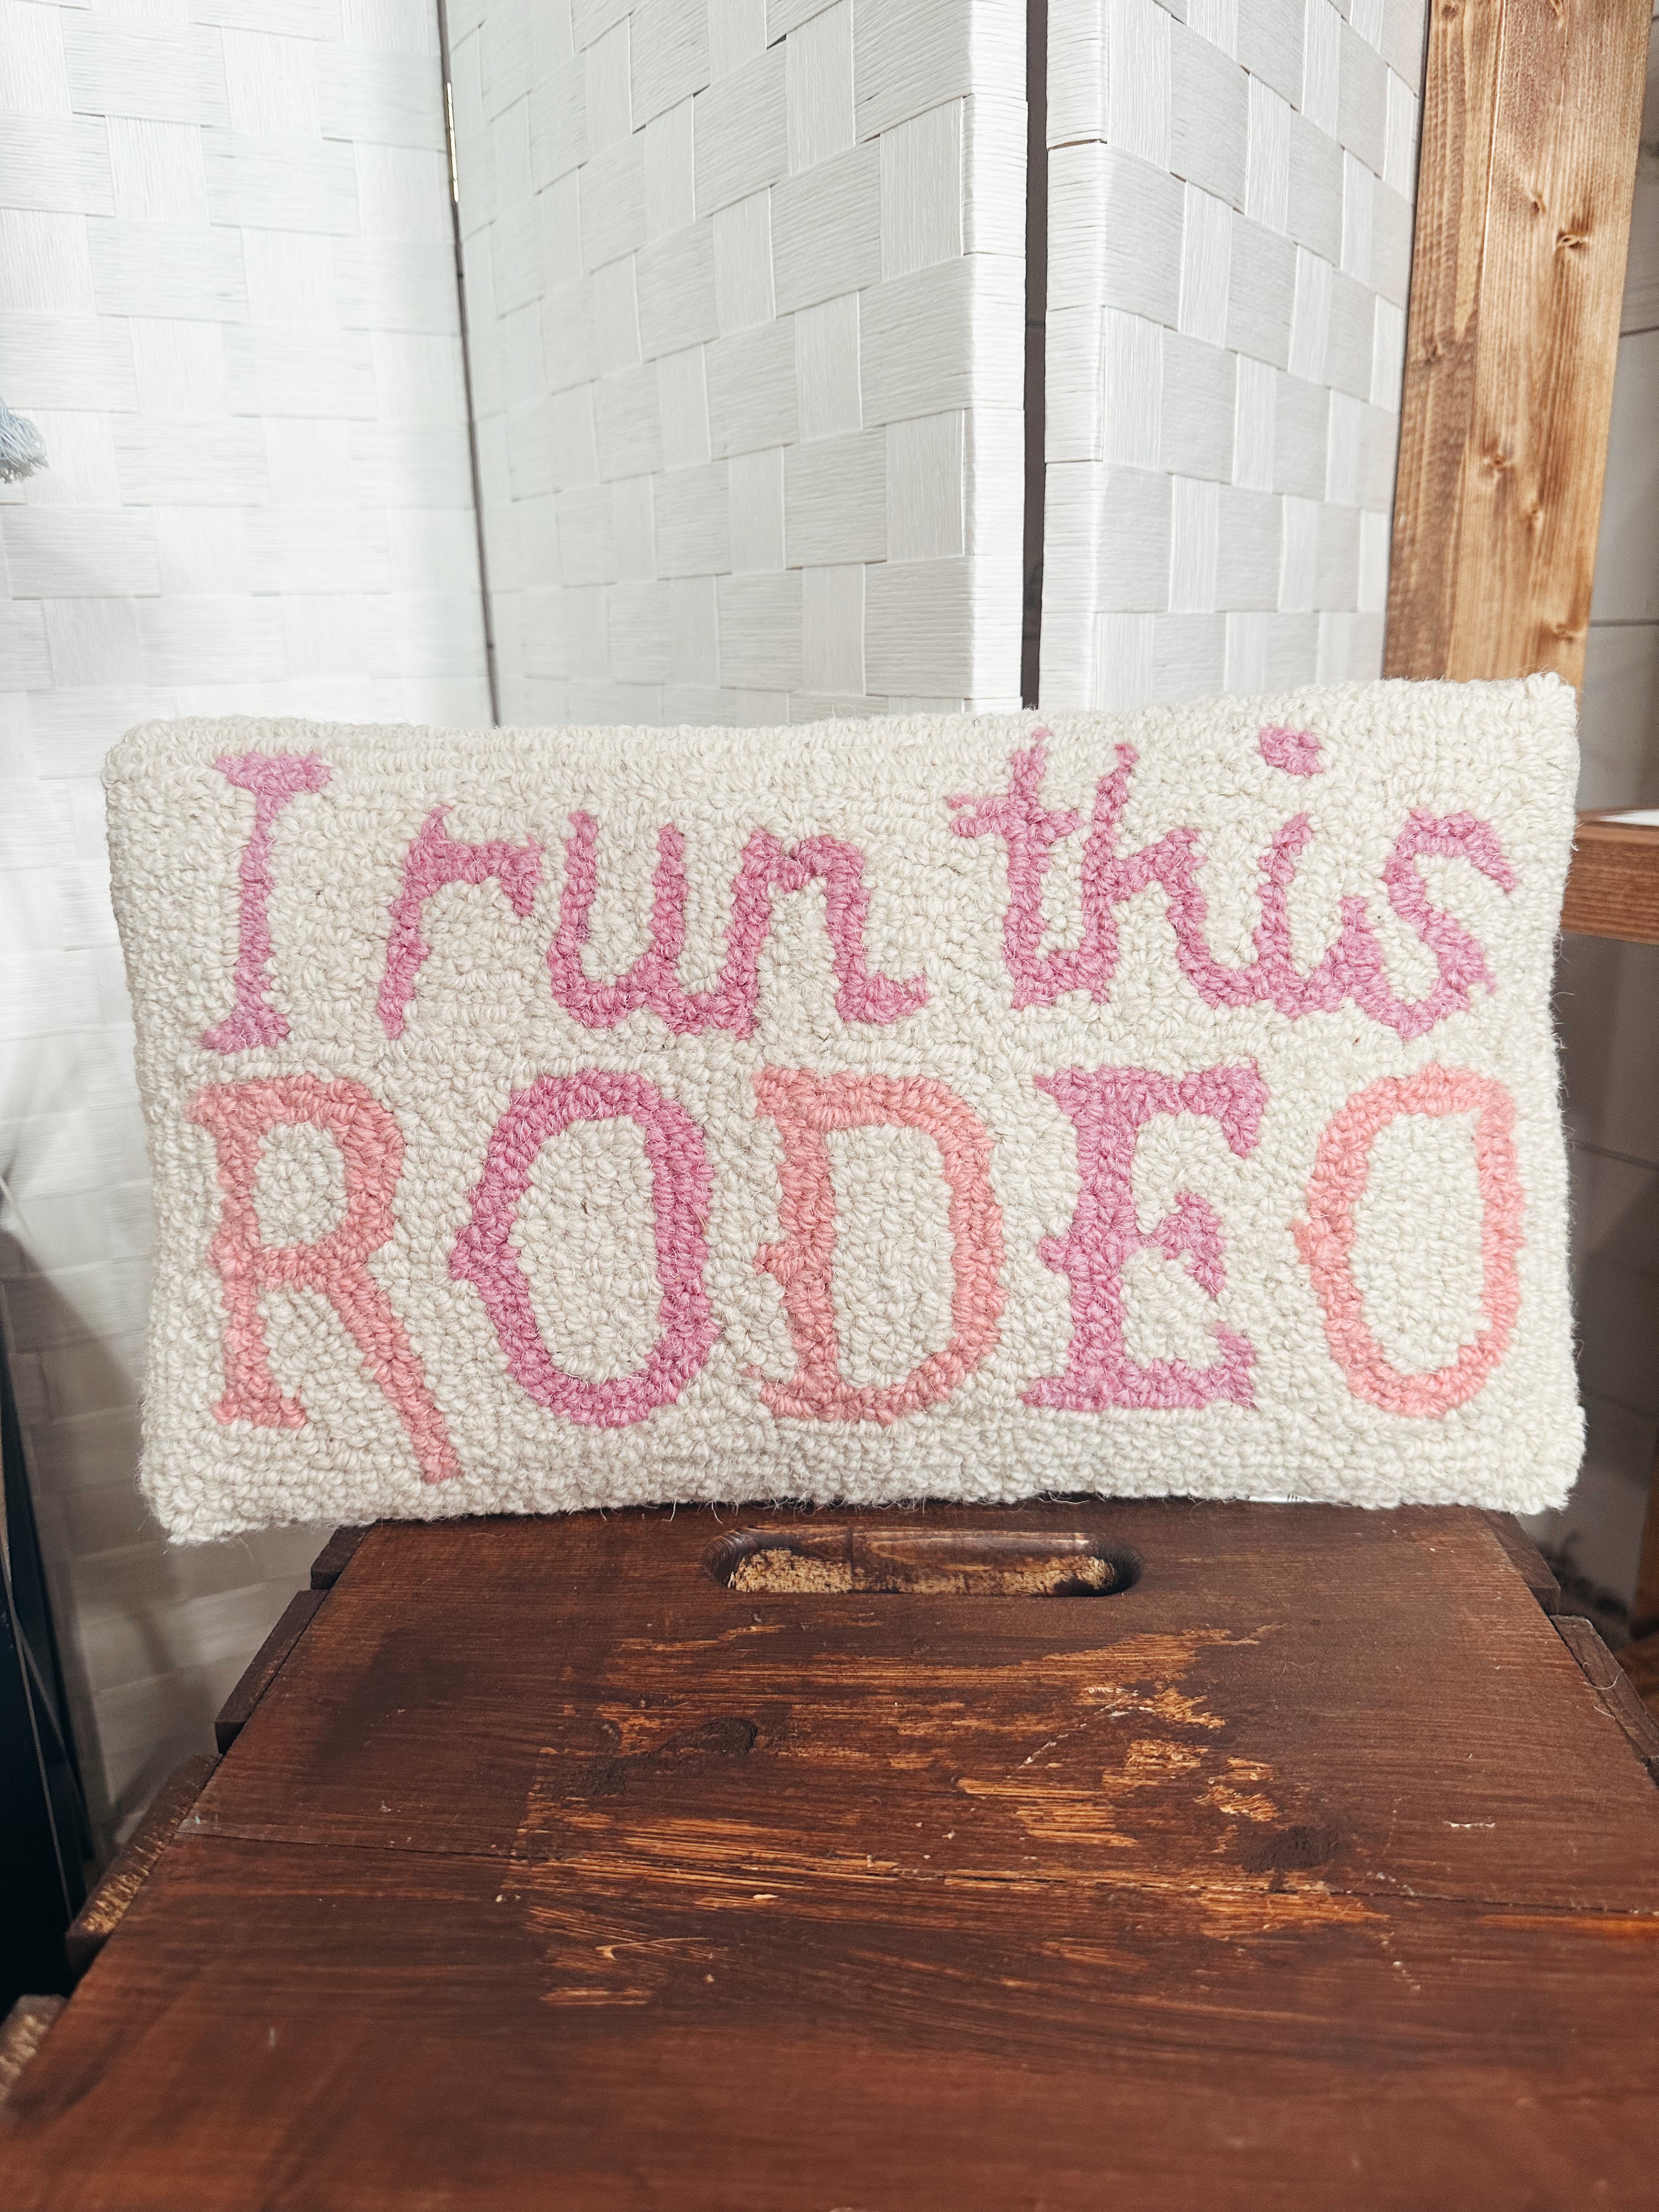 I run this rodeo hook pillow